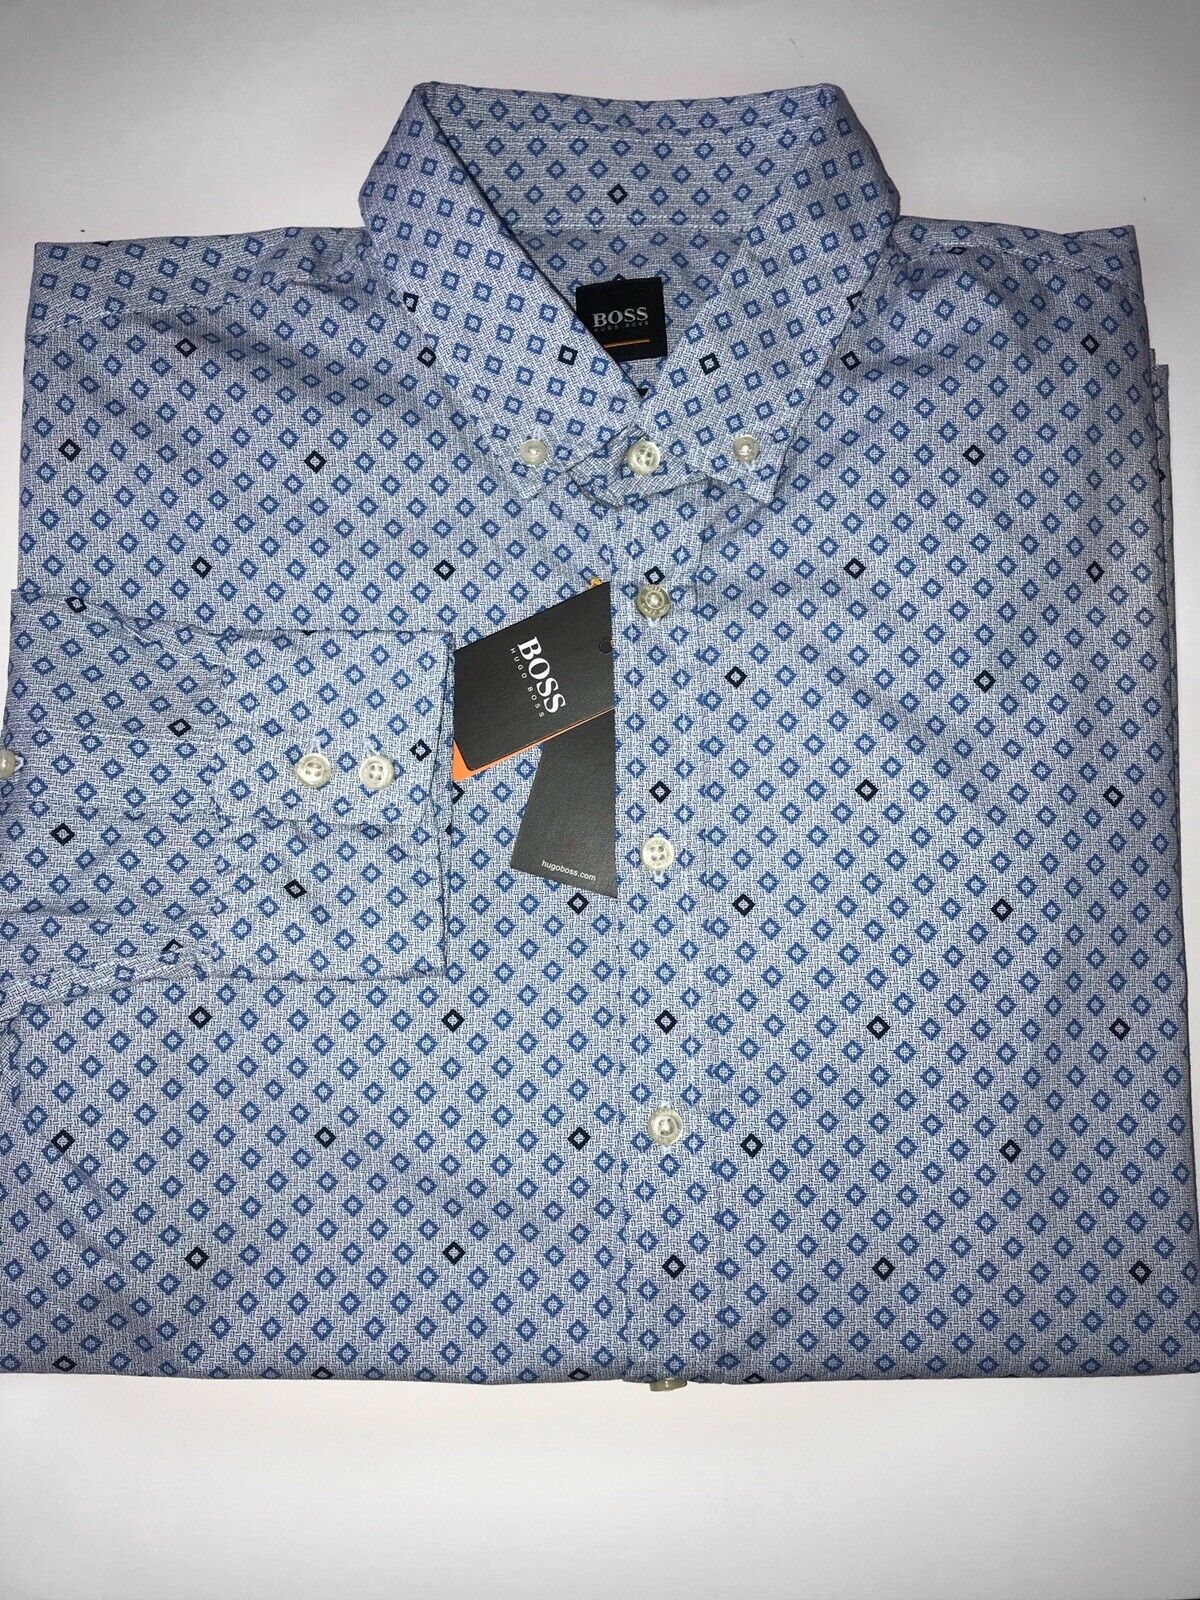 NWT $128 Hugo Boss Mabsoot Men's Slim Fit Cotton Blue Dress Shirt Size 2XL